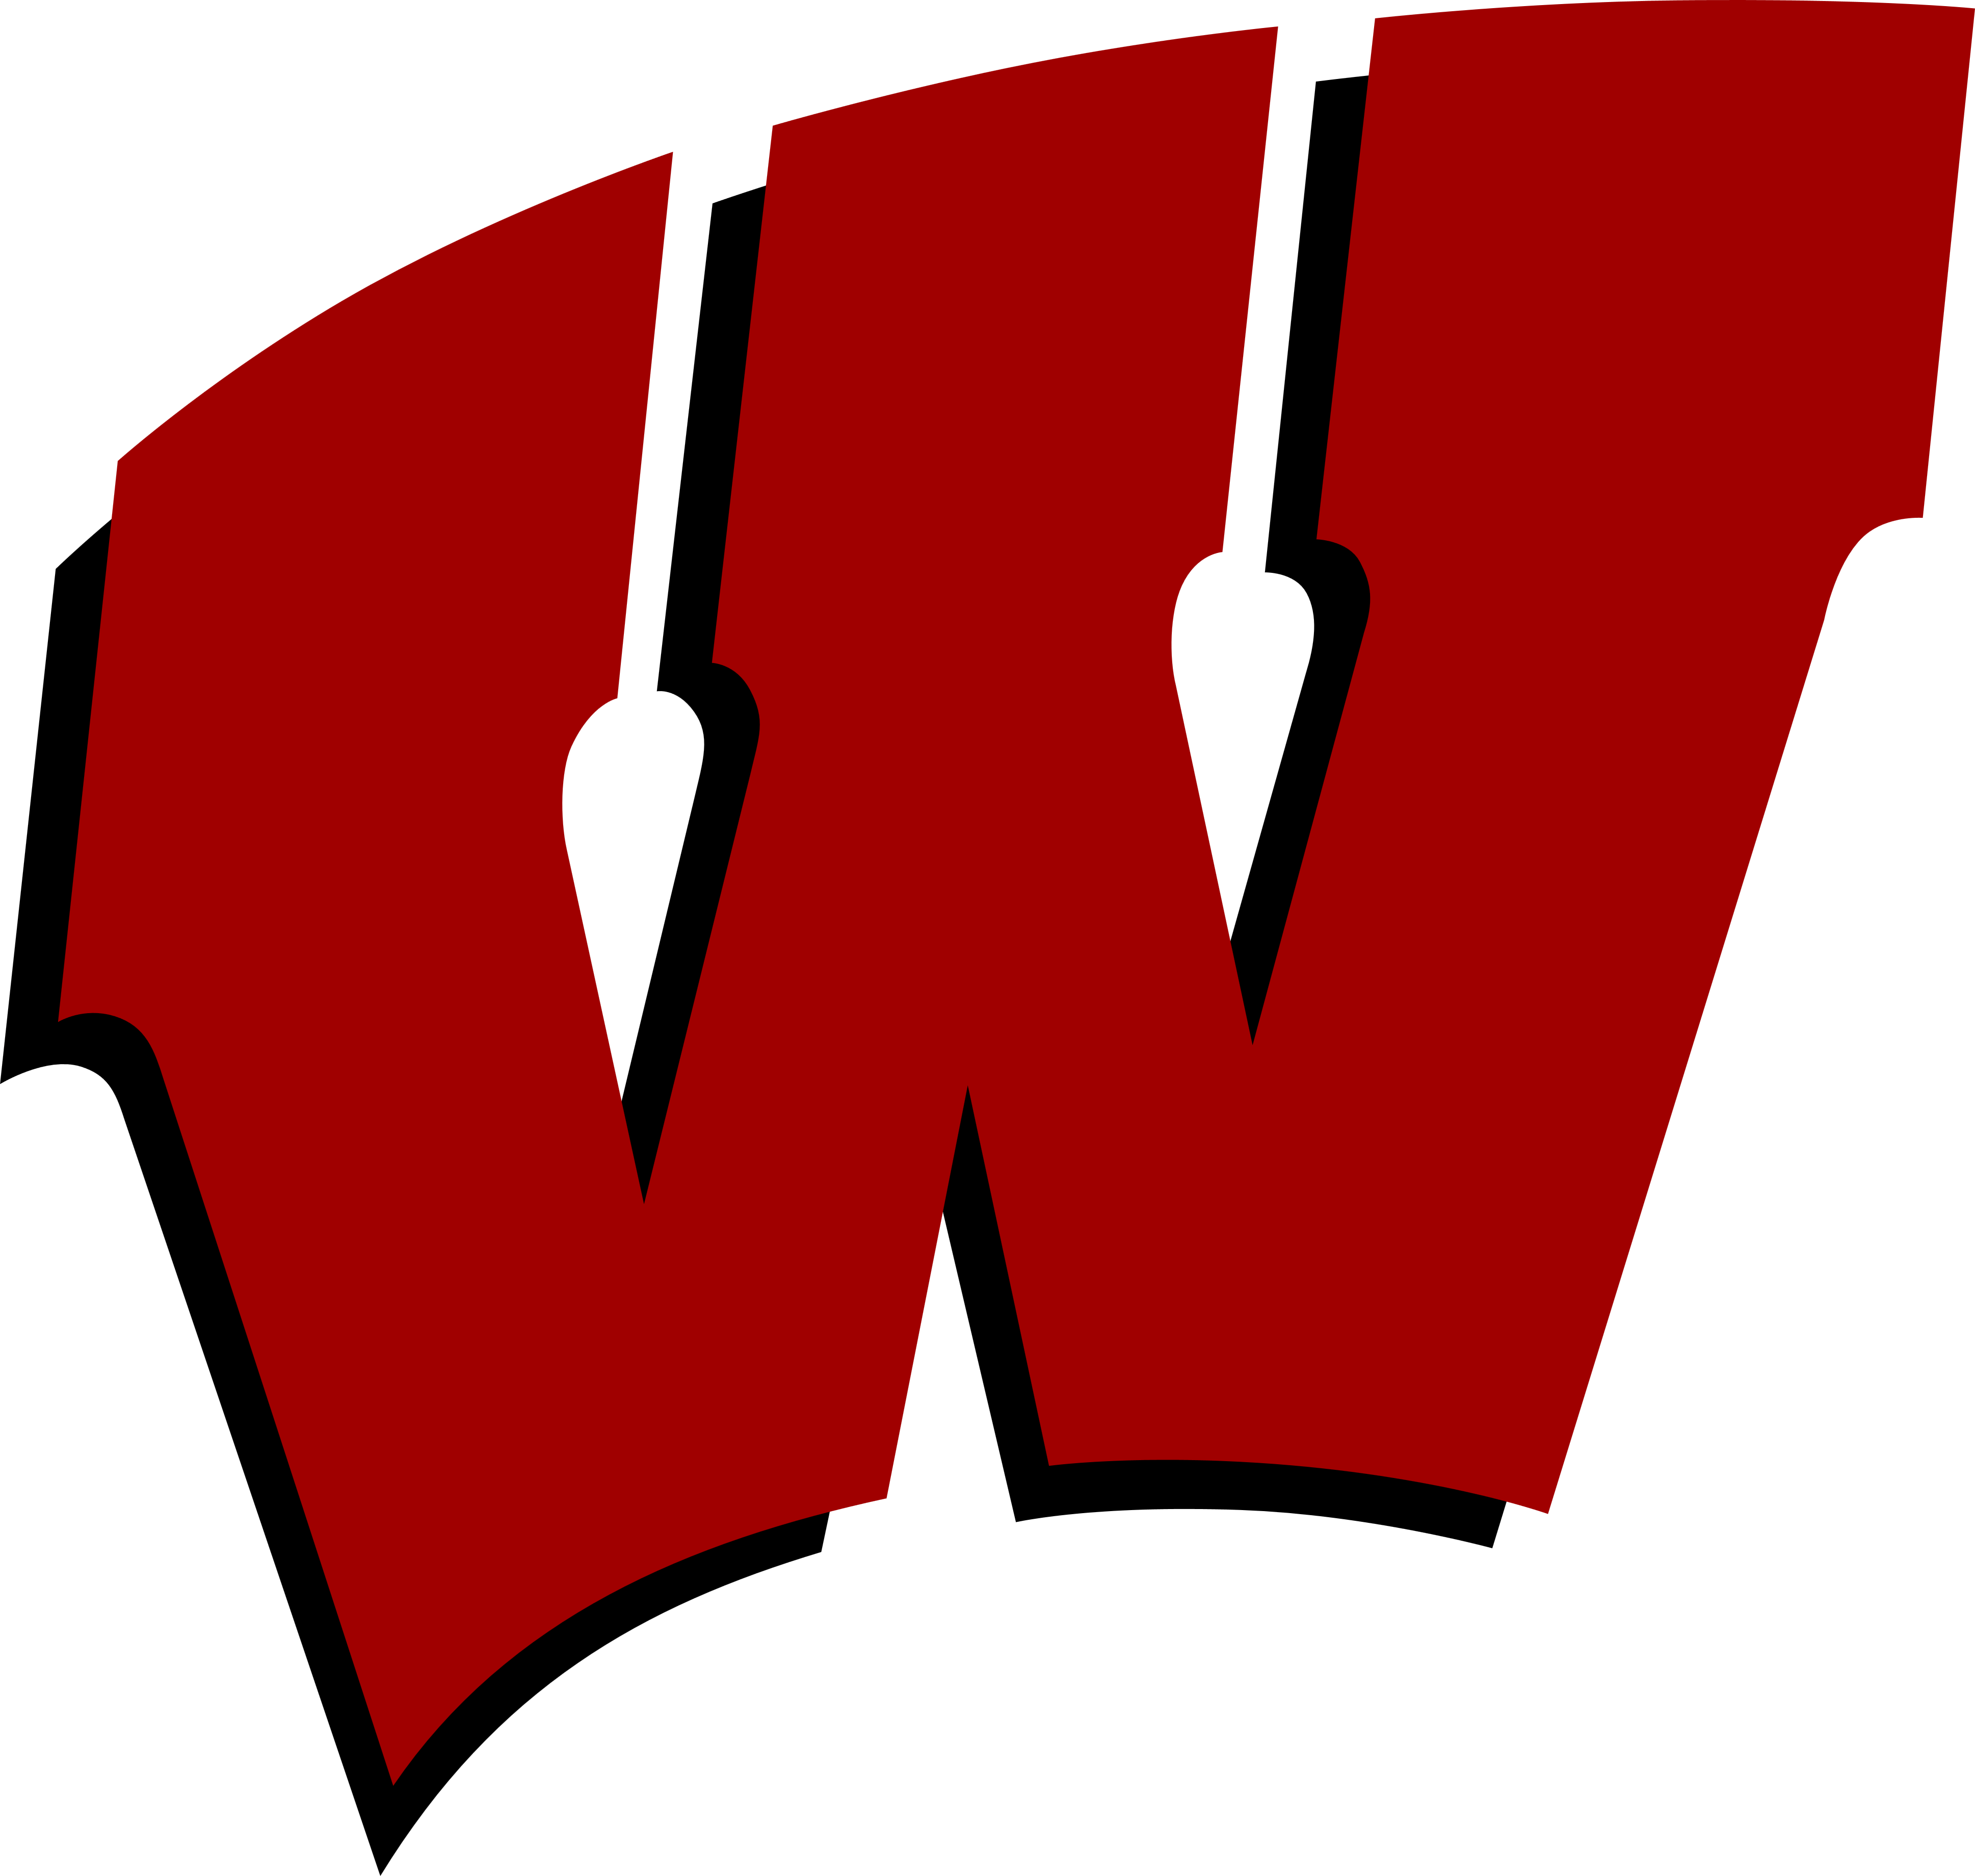 Wisconsin Badgers (Wisconsin Athletics) logo, logotype